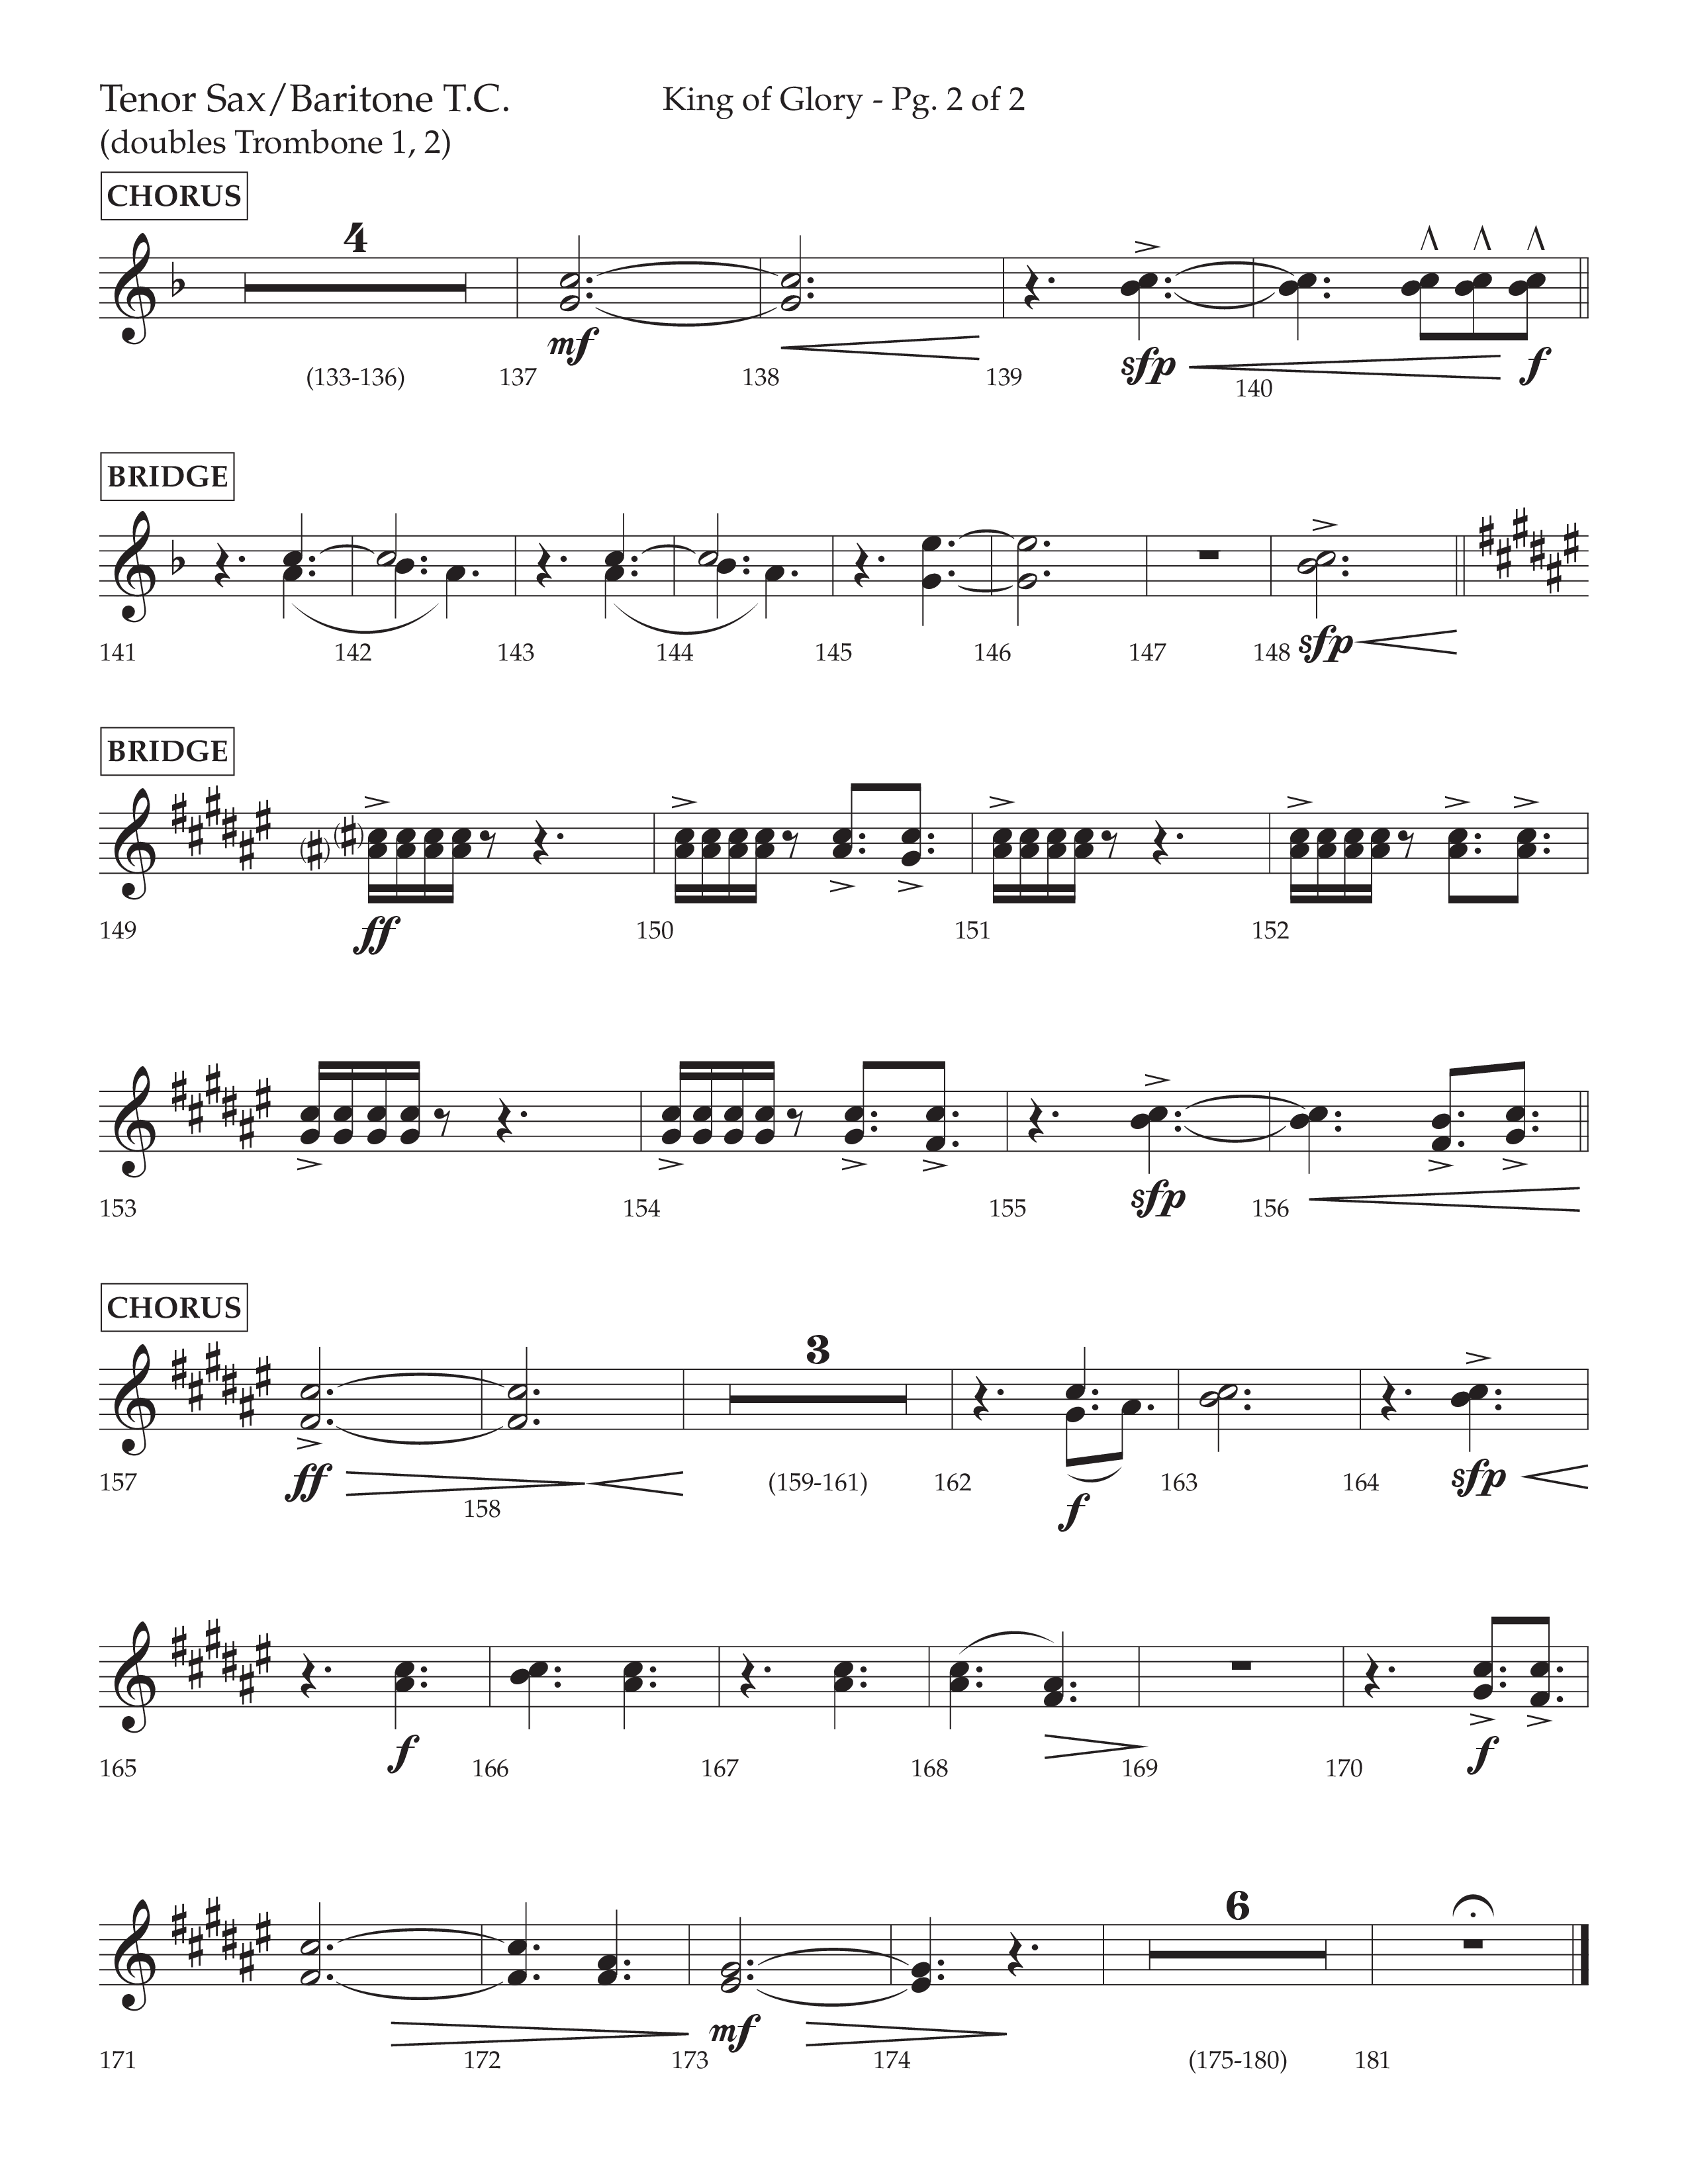 King Of Glory (Choral Anthem SATB) Tenor Sax/Baritone T.C. (Lifeway Choral / Arr. David Wise / Orch. David Shipps)